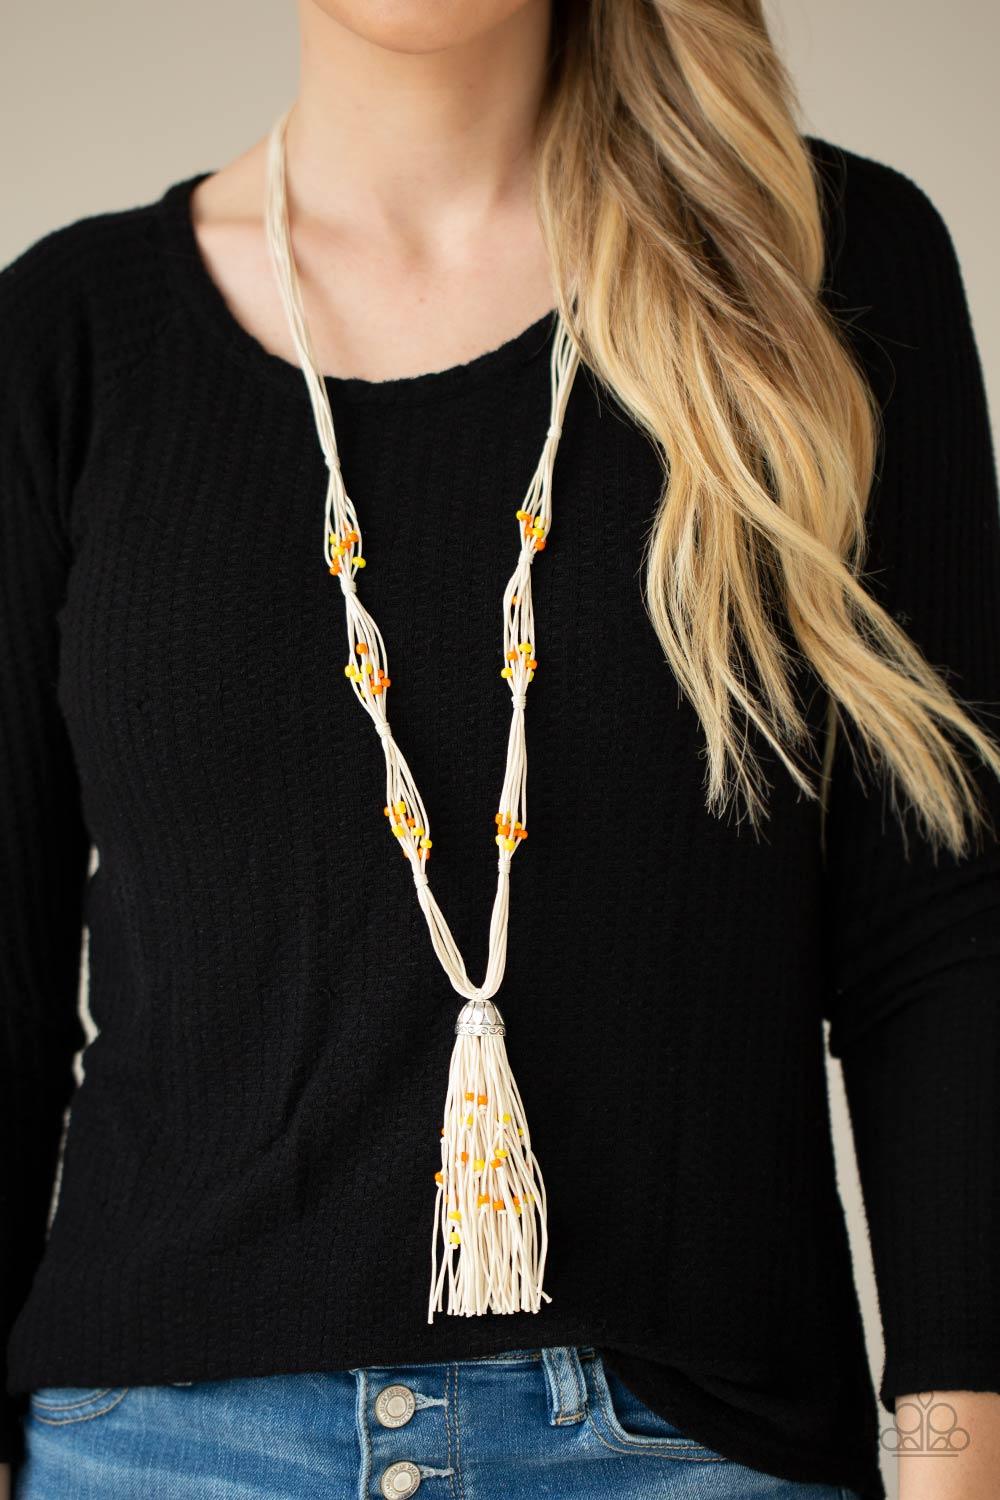 Summery Sensations Orange Necklace - Jewelry by Bretta